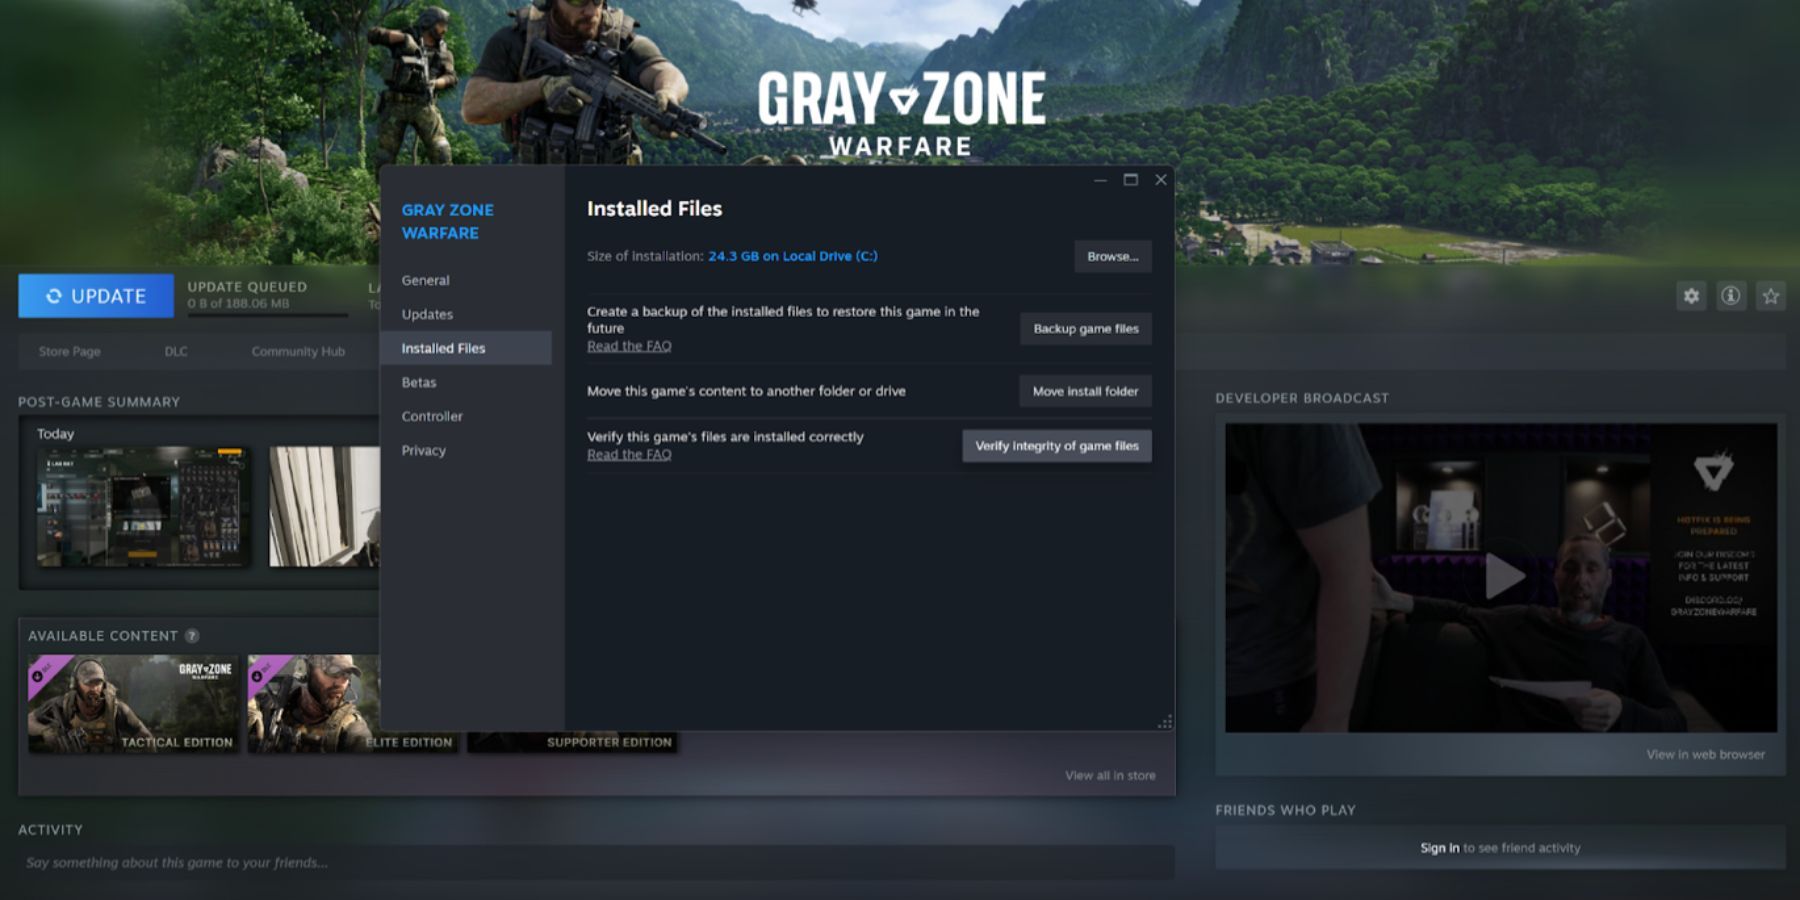 Gray Zone Warfare installed files